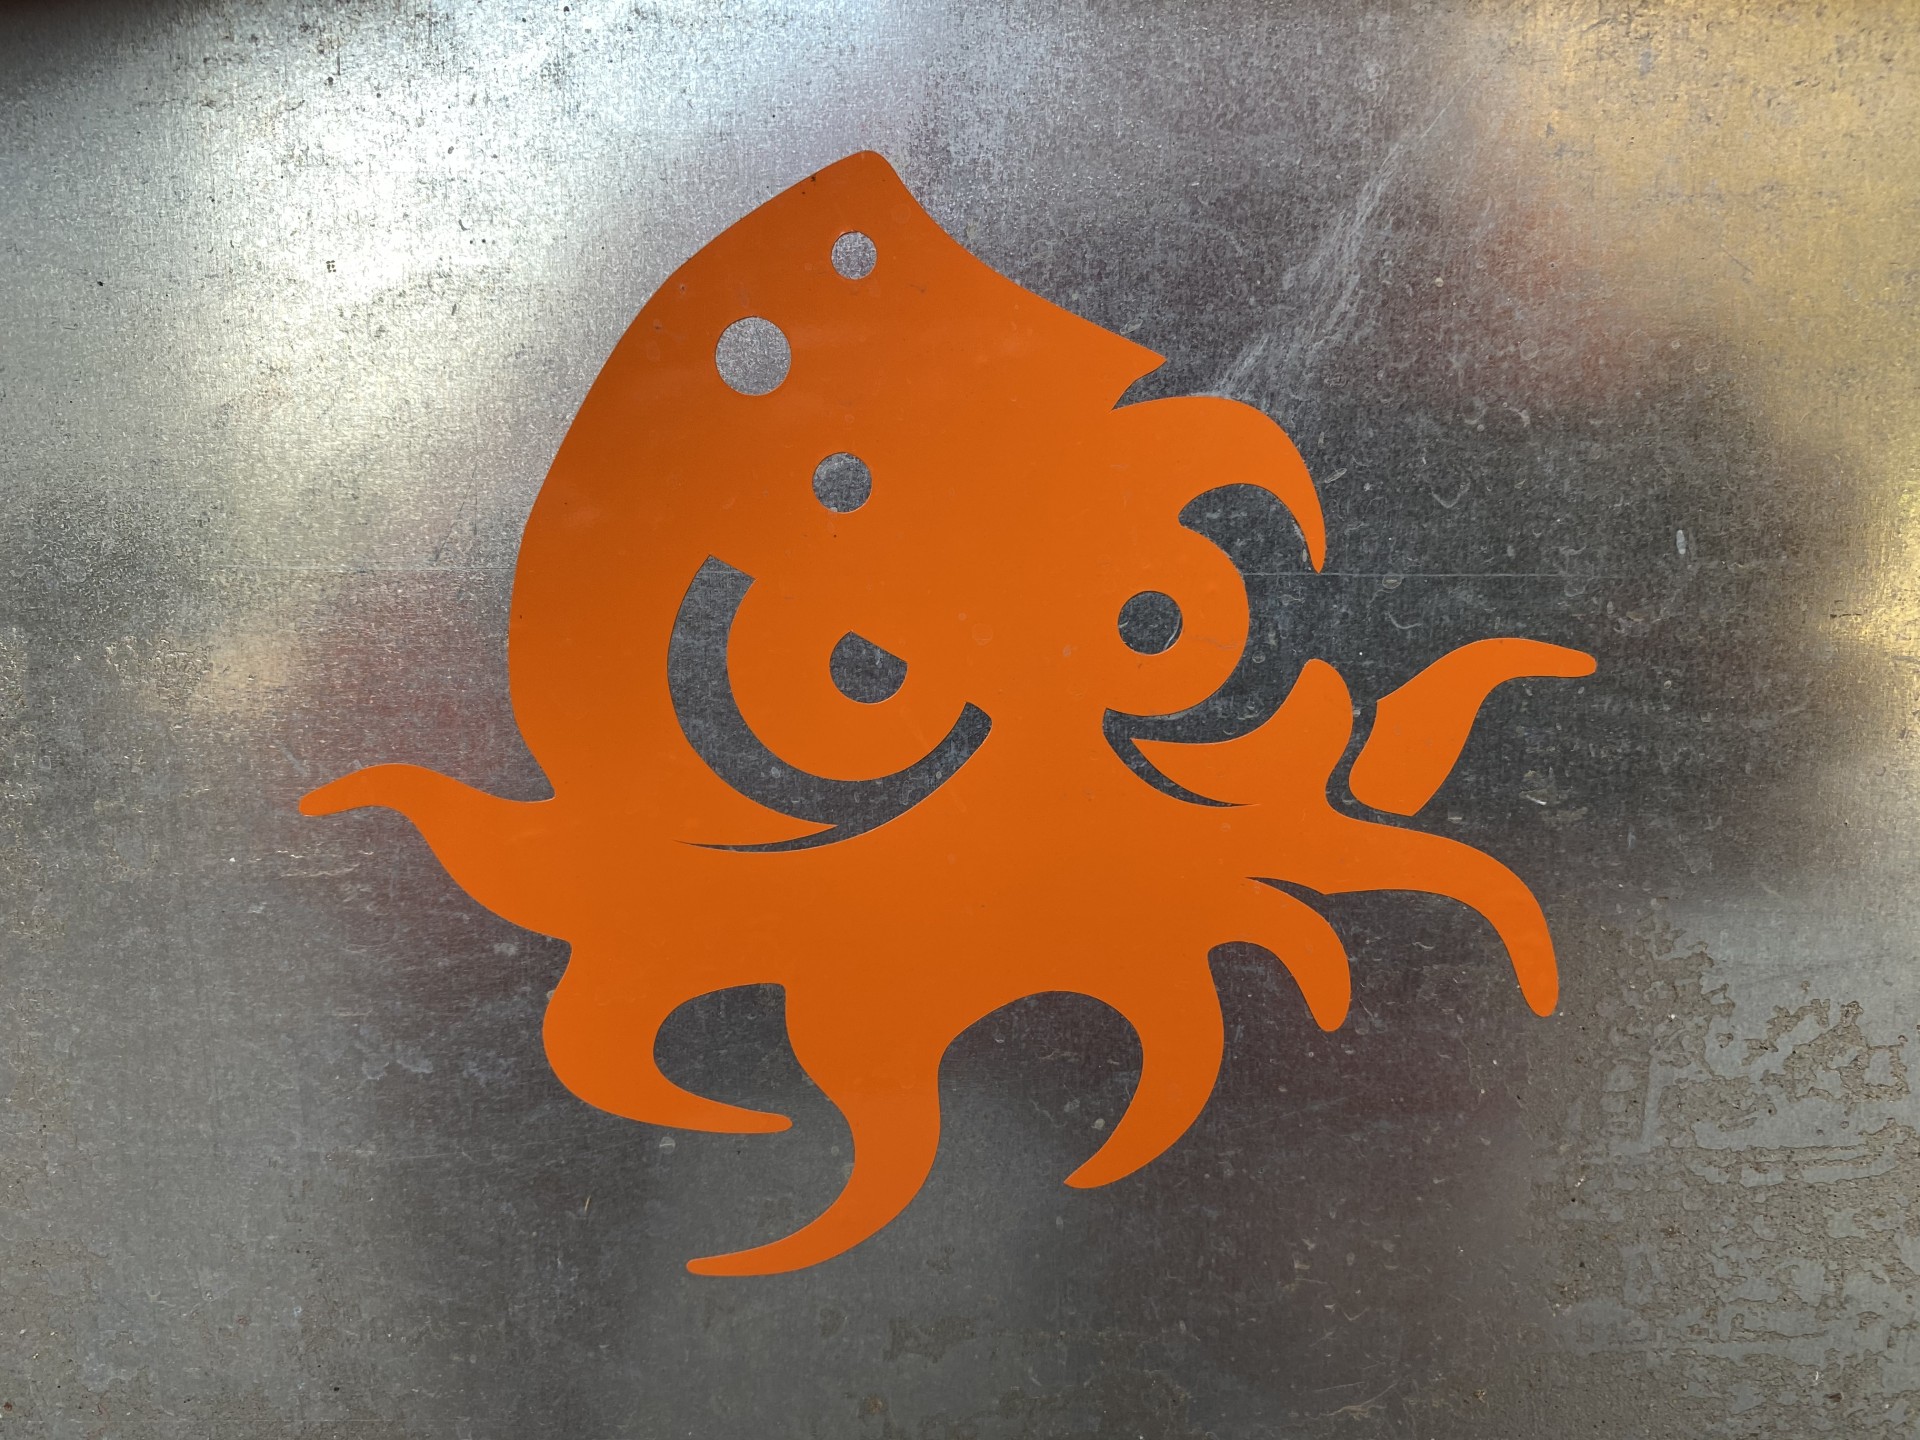 Baby kraken in orange bumper sticker.